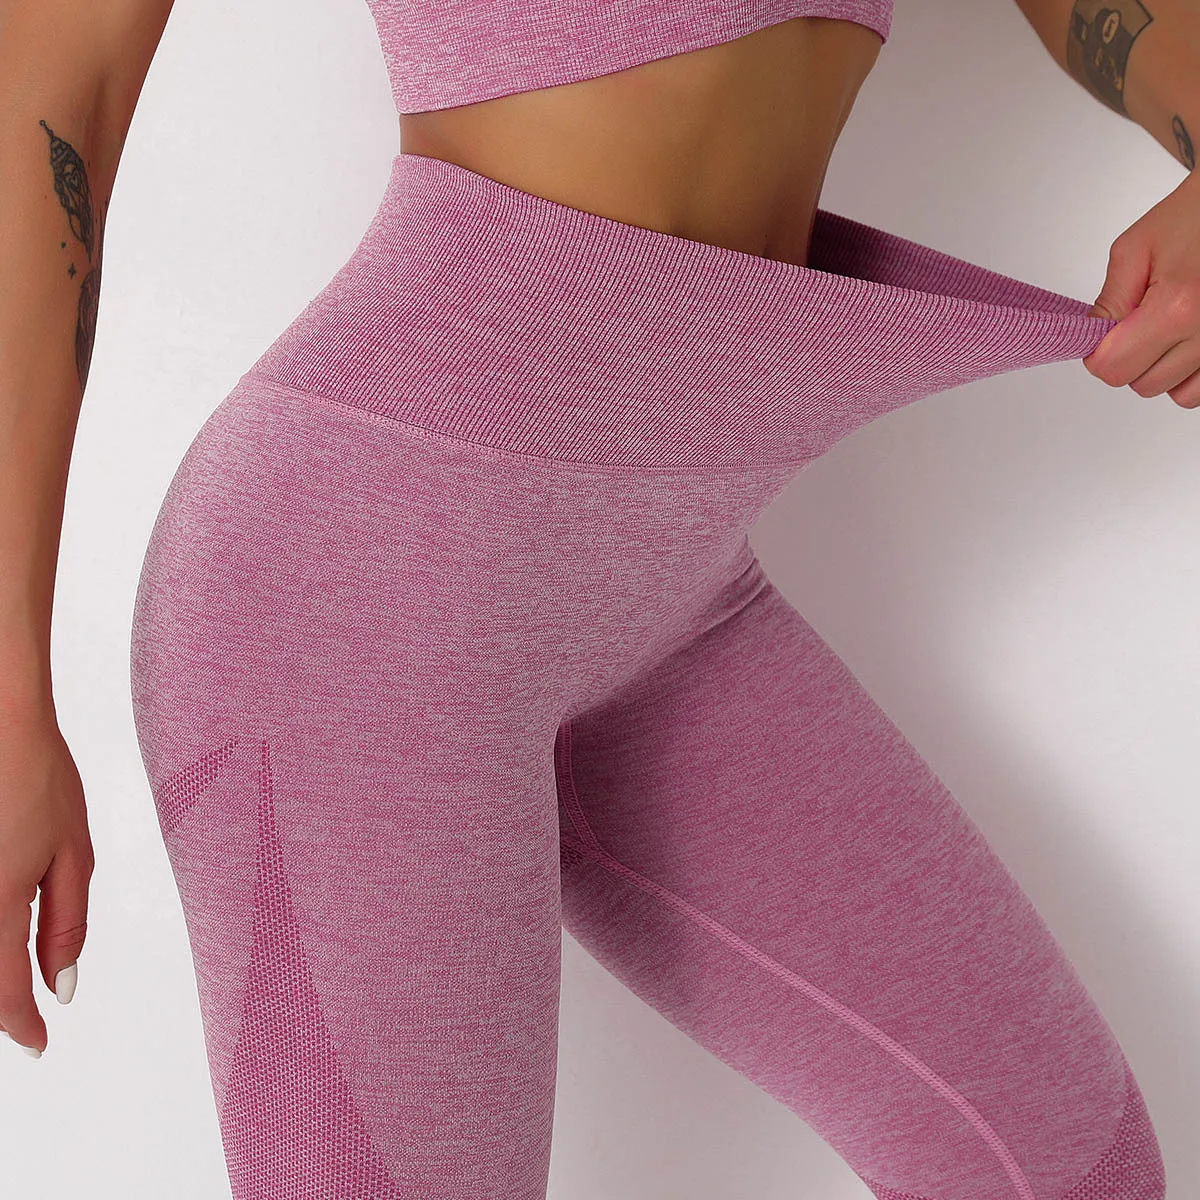 

BBLXF9194 Knitted peach buttocks moisture wicking yoga pants sports fitness Leggings